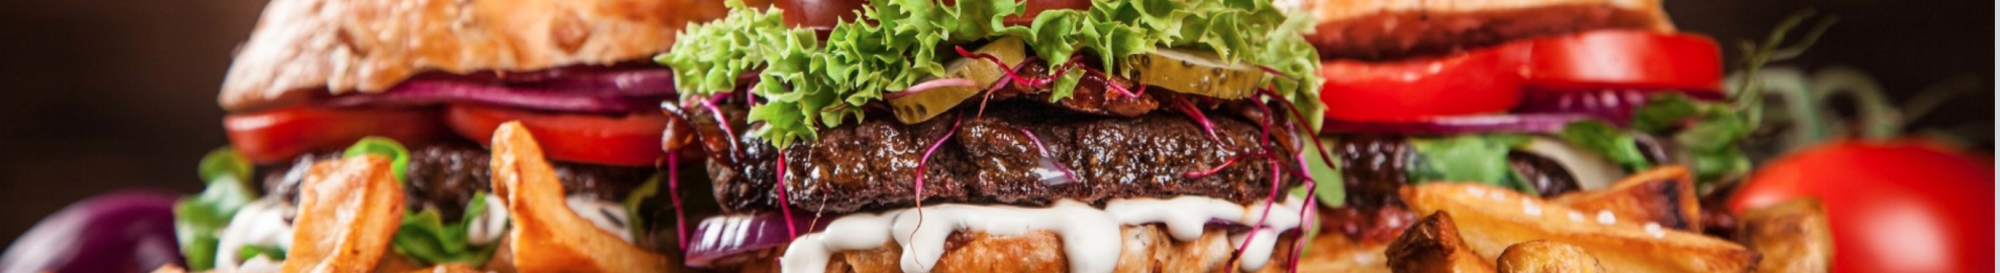 Americana Burger | Hamburguesería En Fuengirola | 100% Halal